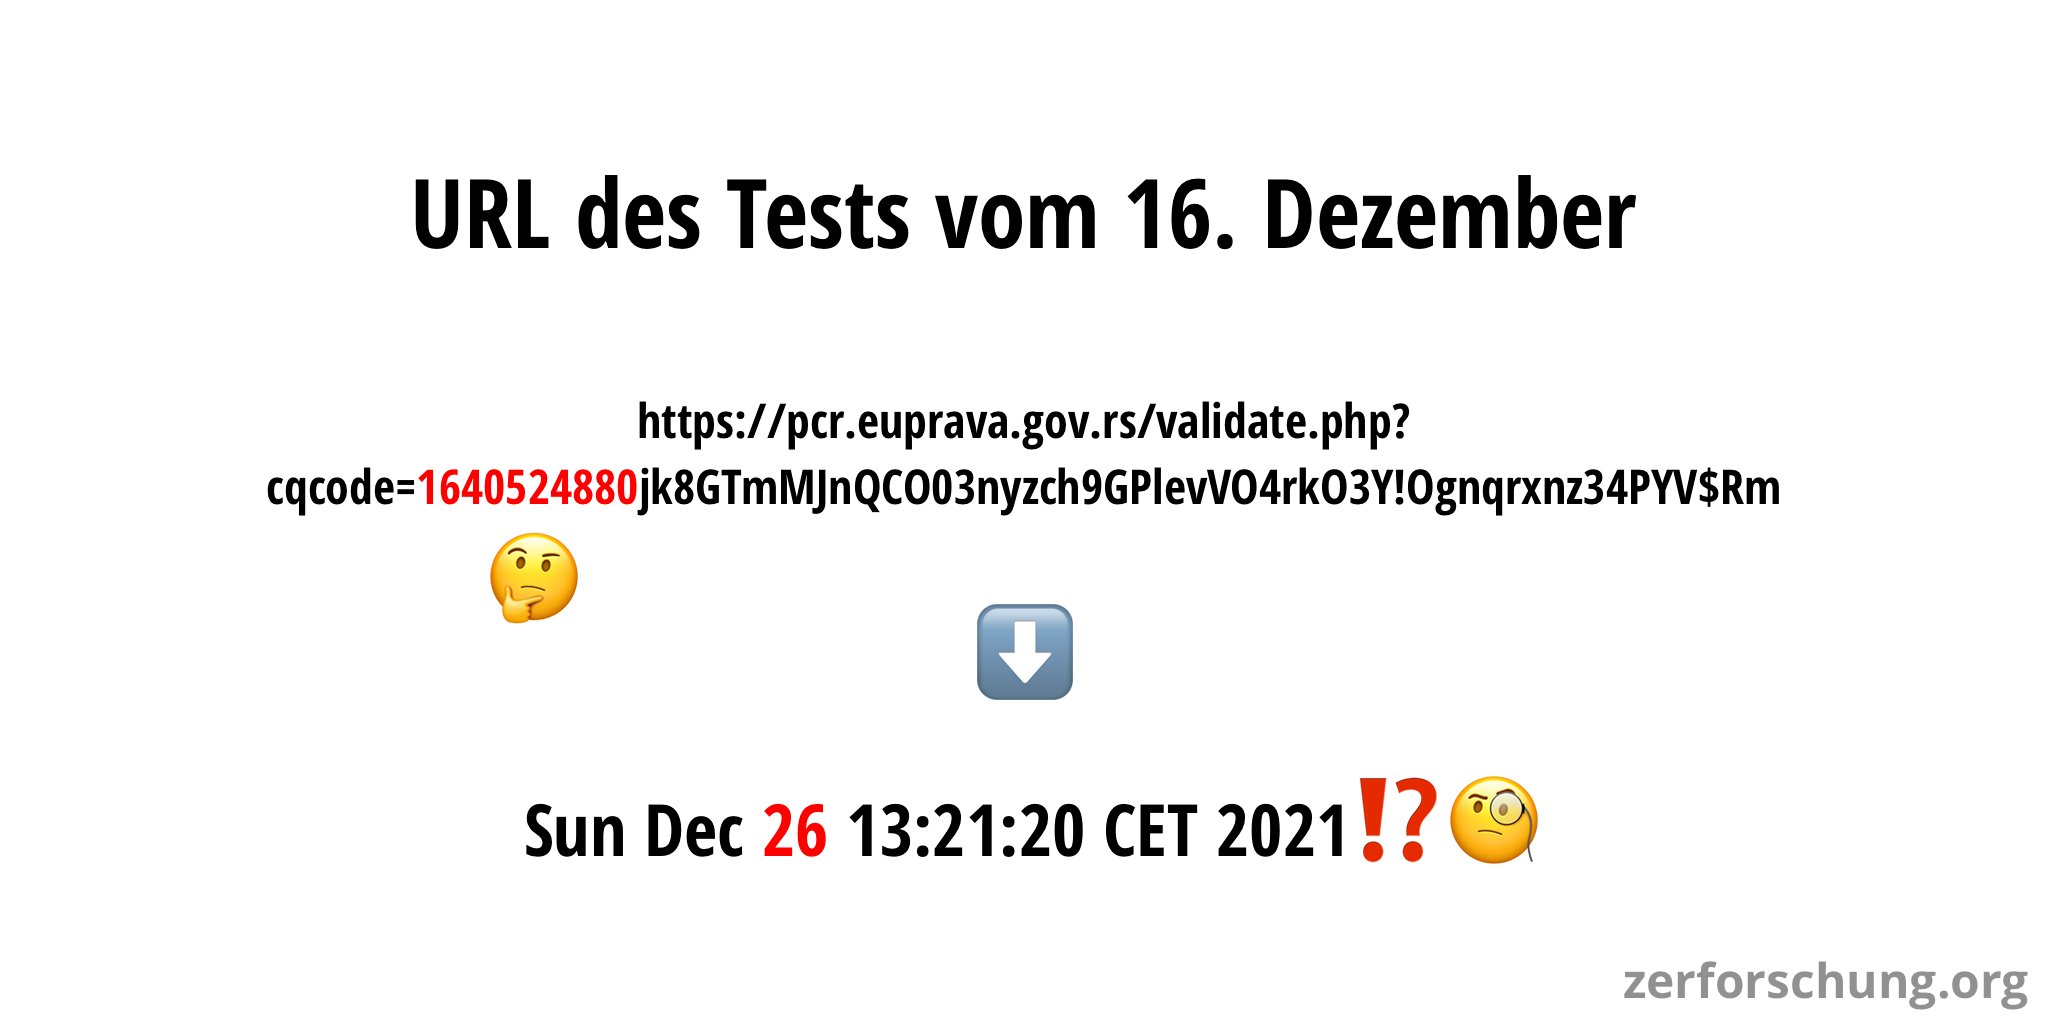 URL zur Verifikations-Website des Tests vom 16. Dezember, mit hervorgehobenem Abschnitt des Timestamps sowie die lesbare Repräsentation: Sonntag, 26. Dezember 2021 13:21:20 CET